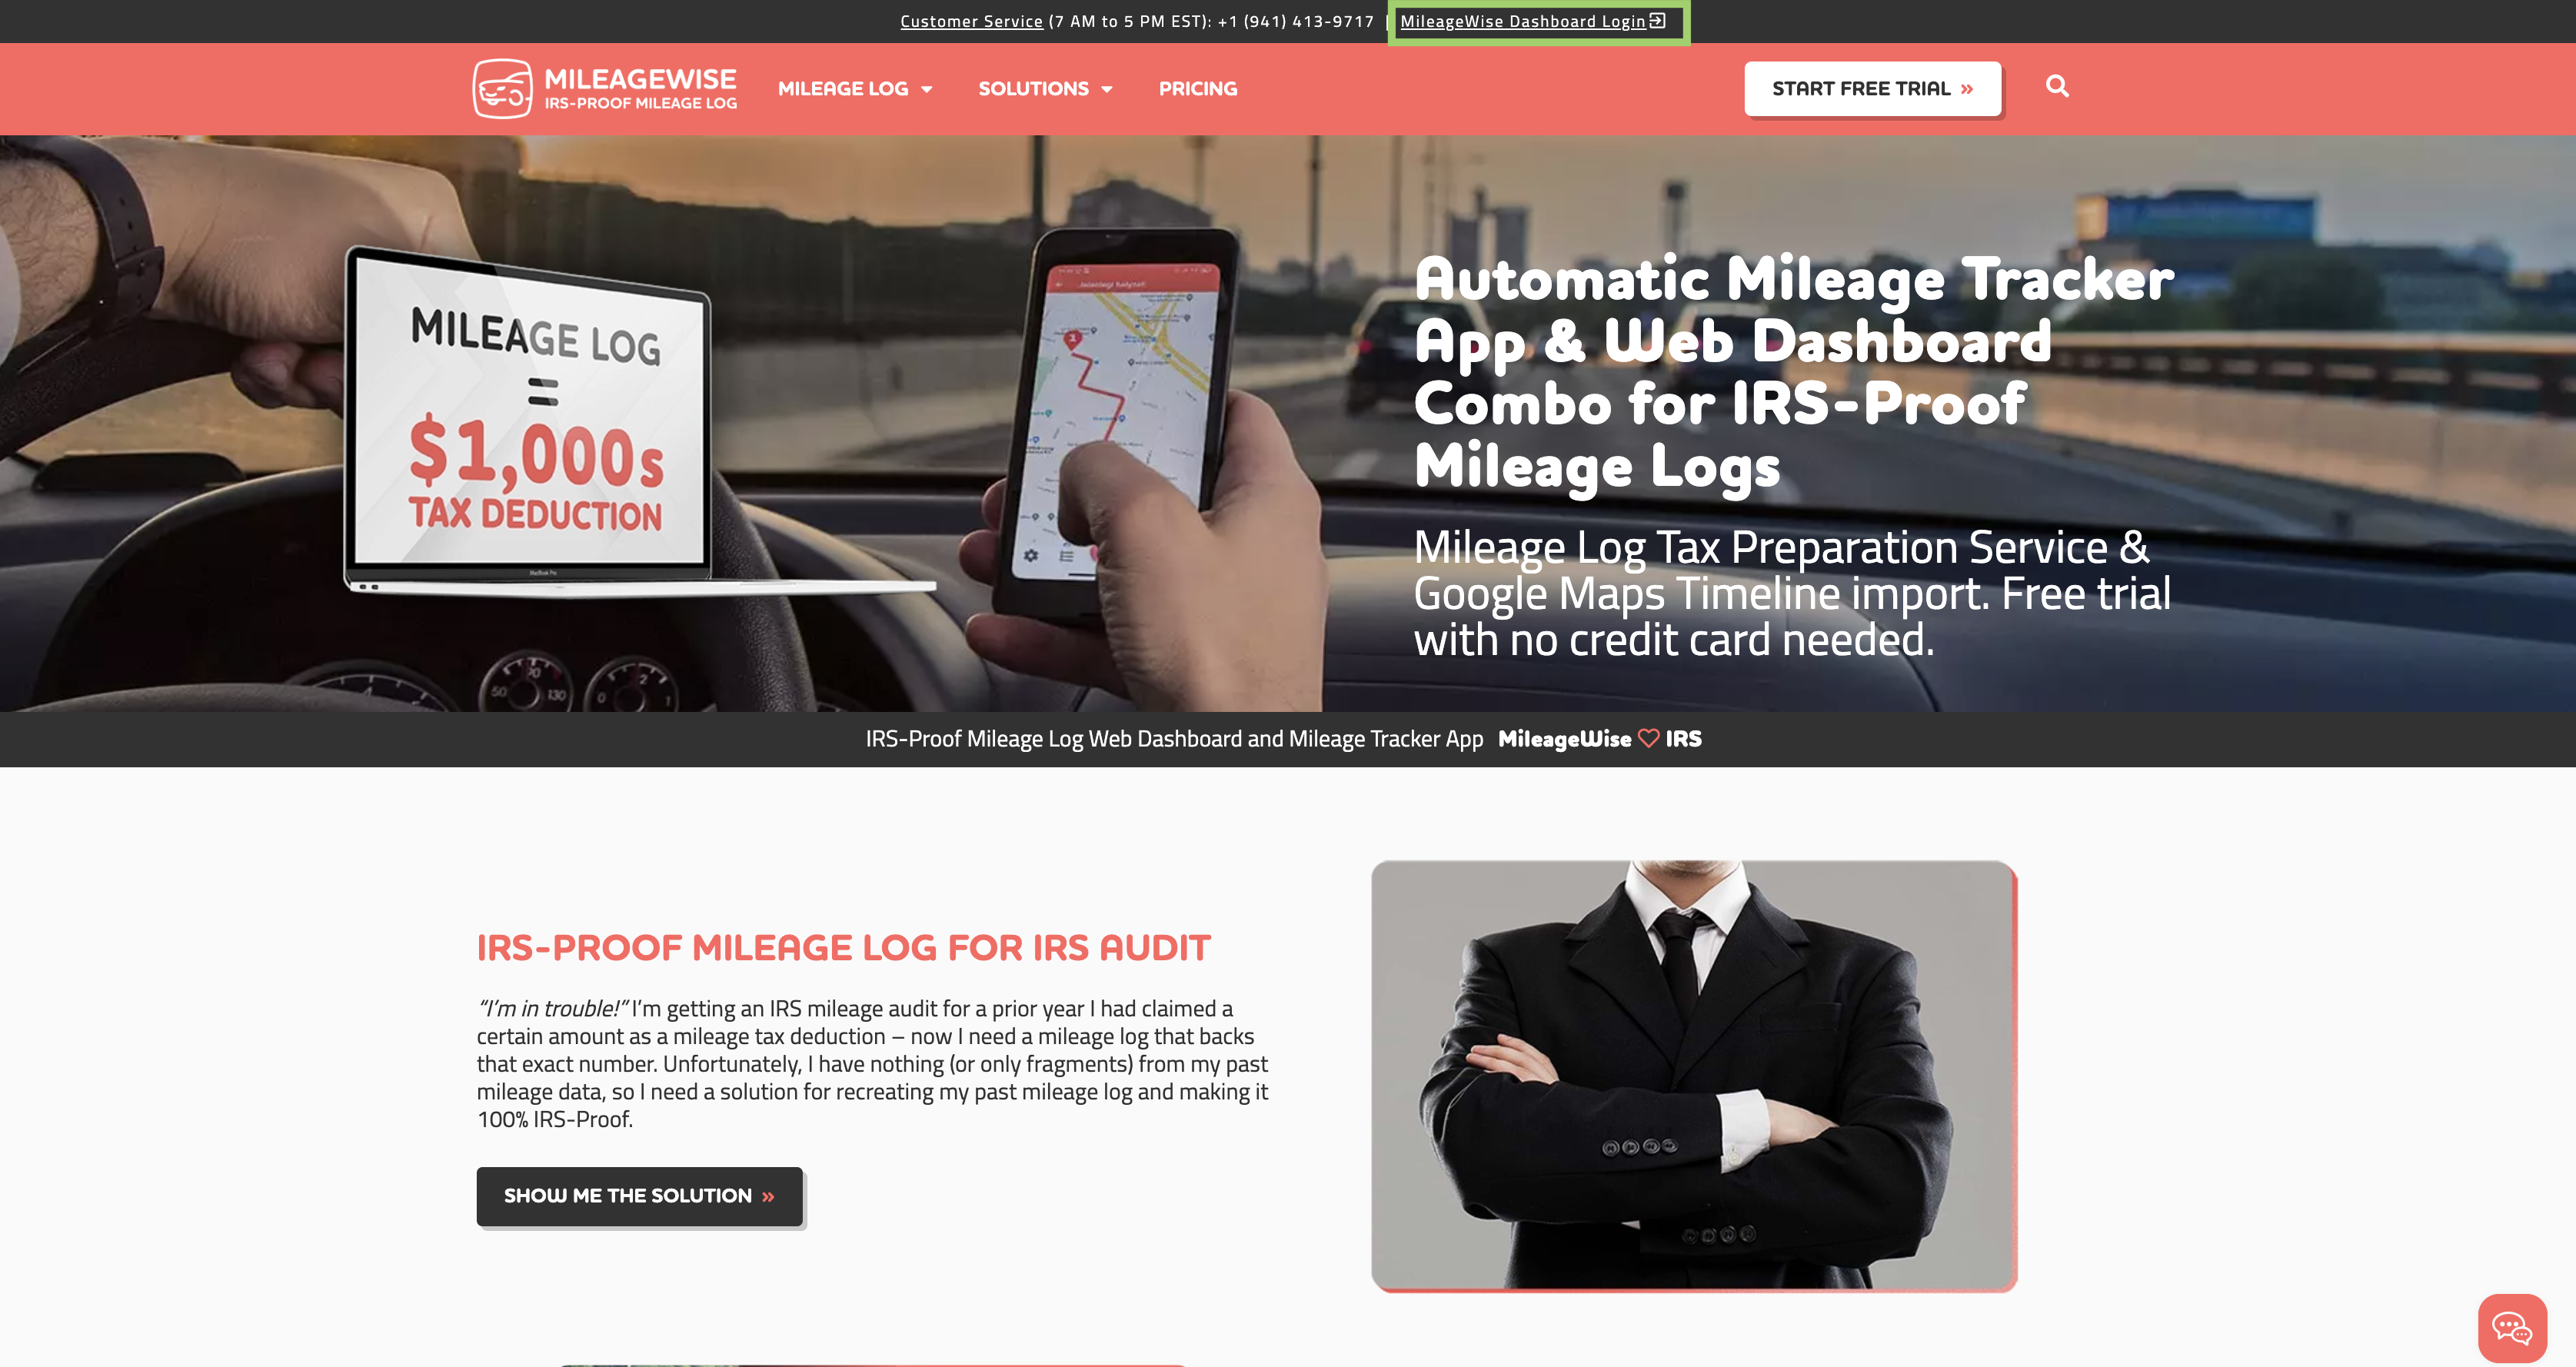 mileagewise webpage login